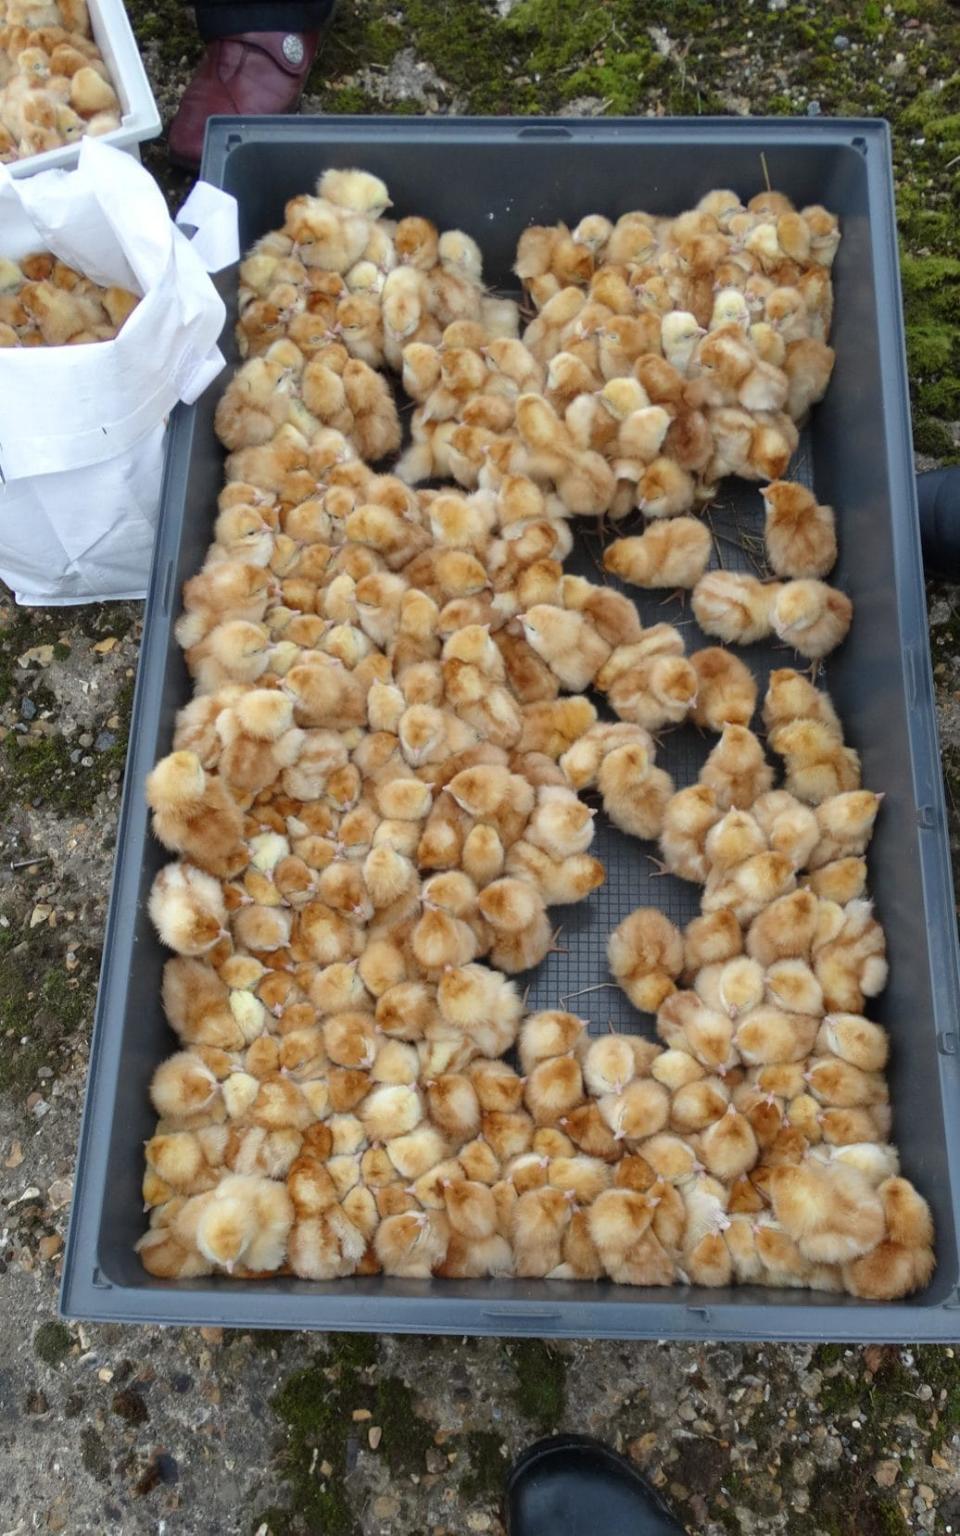 1,800 newborn chicks found abandoned in a field 